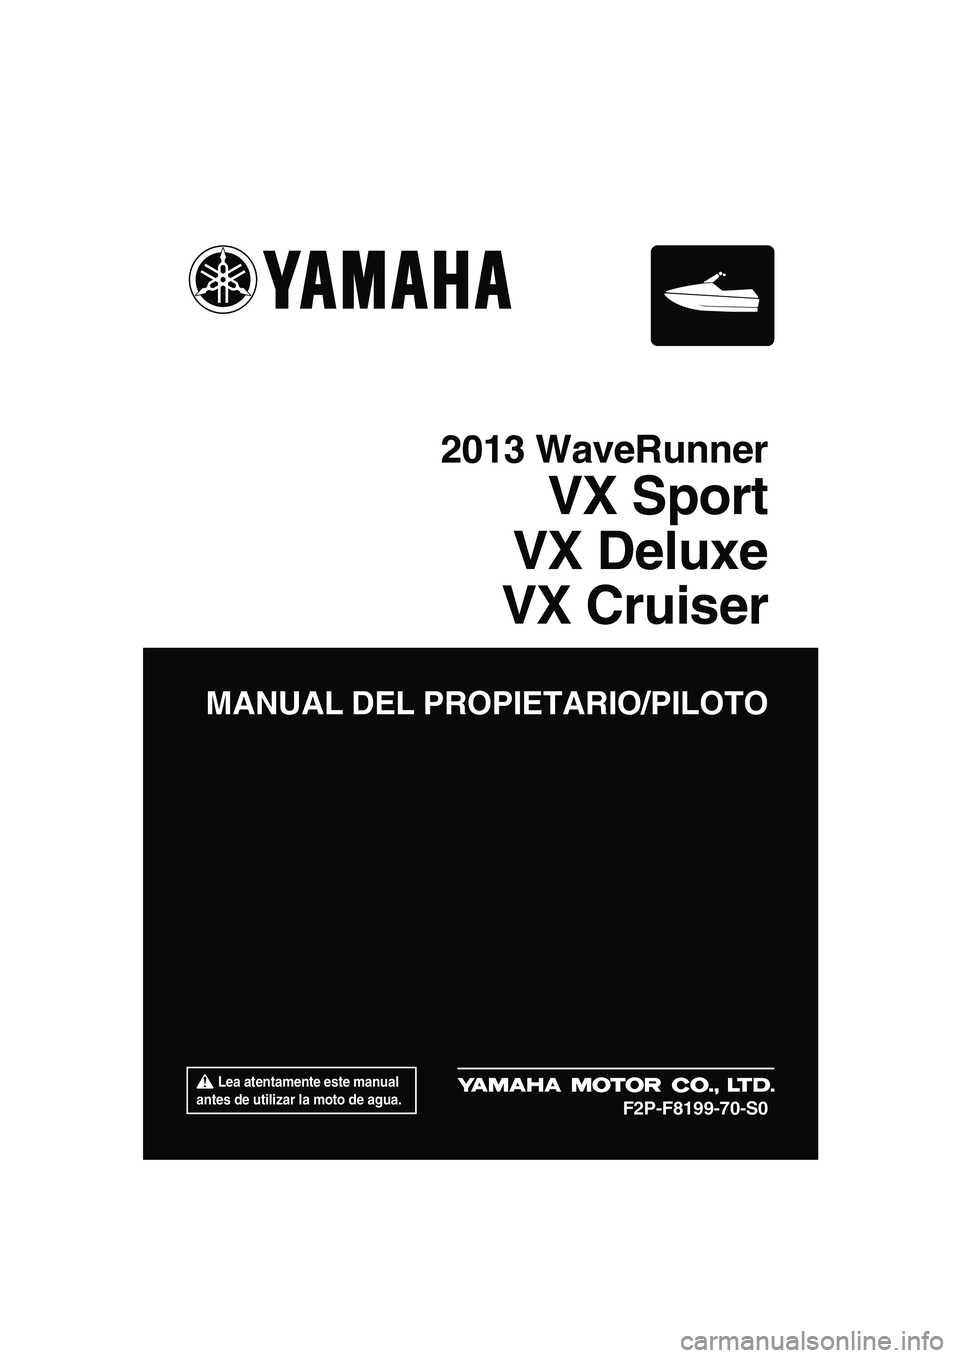 YAMAHA VX DELUXE 2013  Manuale de Empleo (in Spanish)  Lea atentamente este manual 
antes de utilizar la moto de agua.
MANUAL DEL PROPIETARIO/PILOTO
2013 WaveRunner
VX Sport
VX Deluxe
VX Cruiser
F2P-F8199-70-S0
UF2P70S0.book  Page 1  Tuesday, July 24, 20